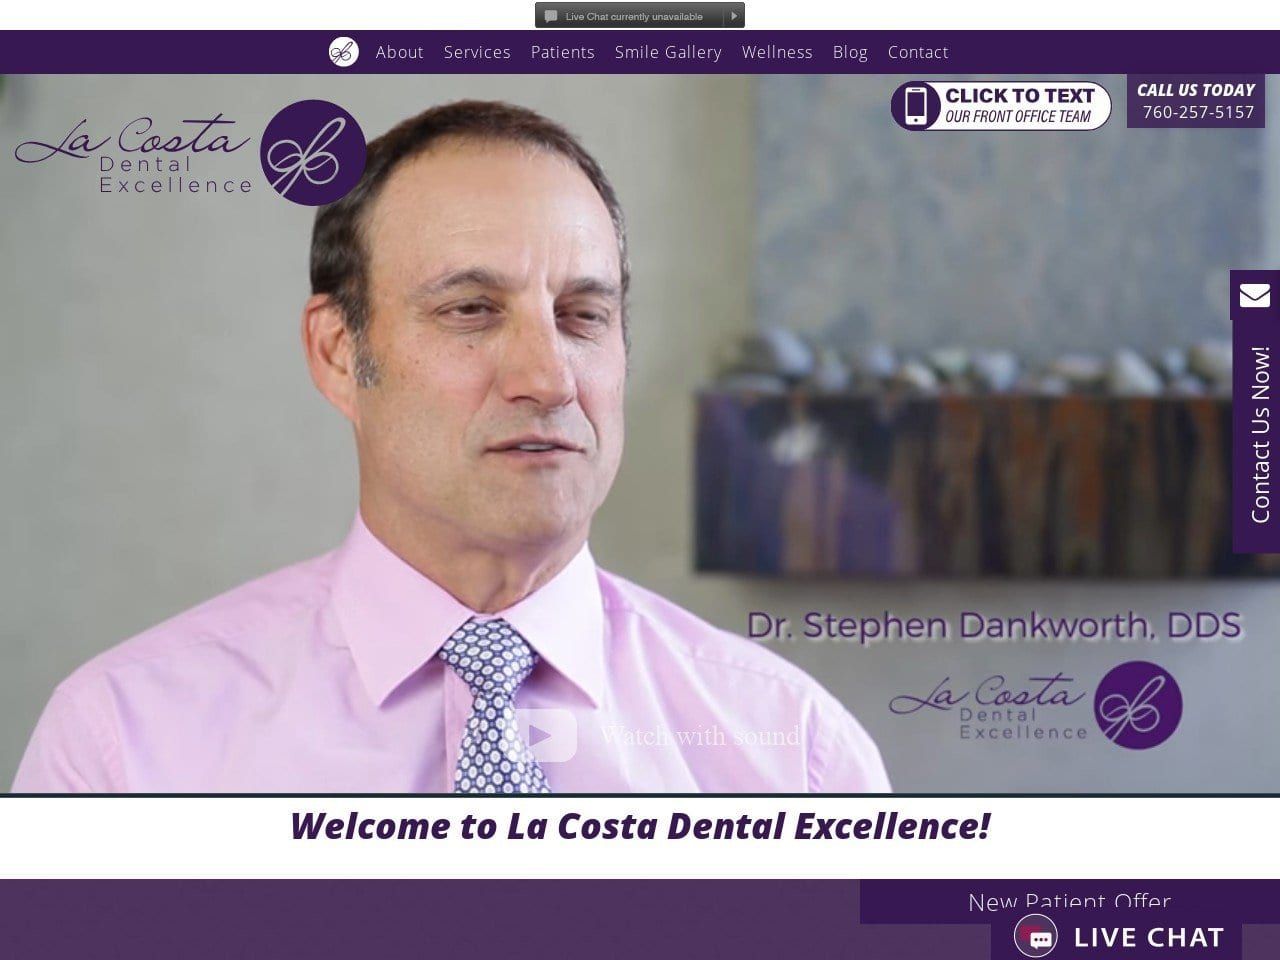 Lacosta Dental Excellence Website Screenshot from lacostadentalexcellence.com